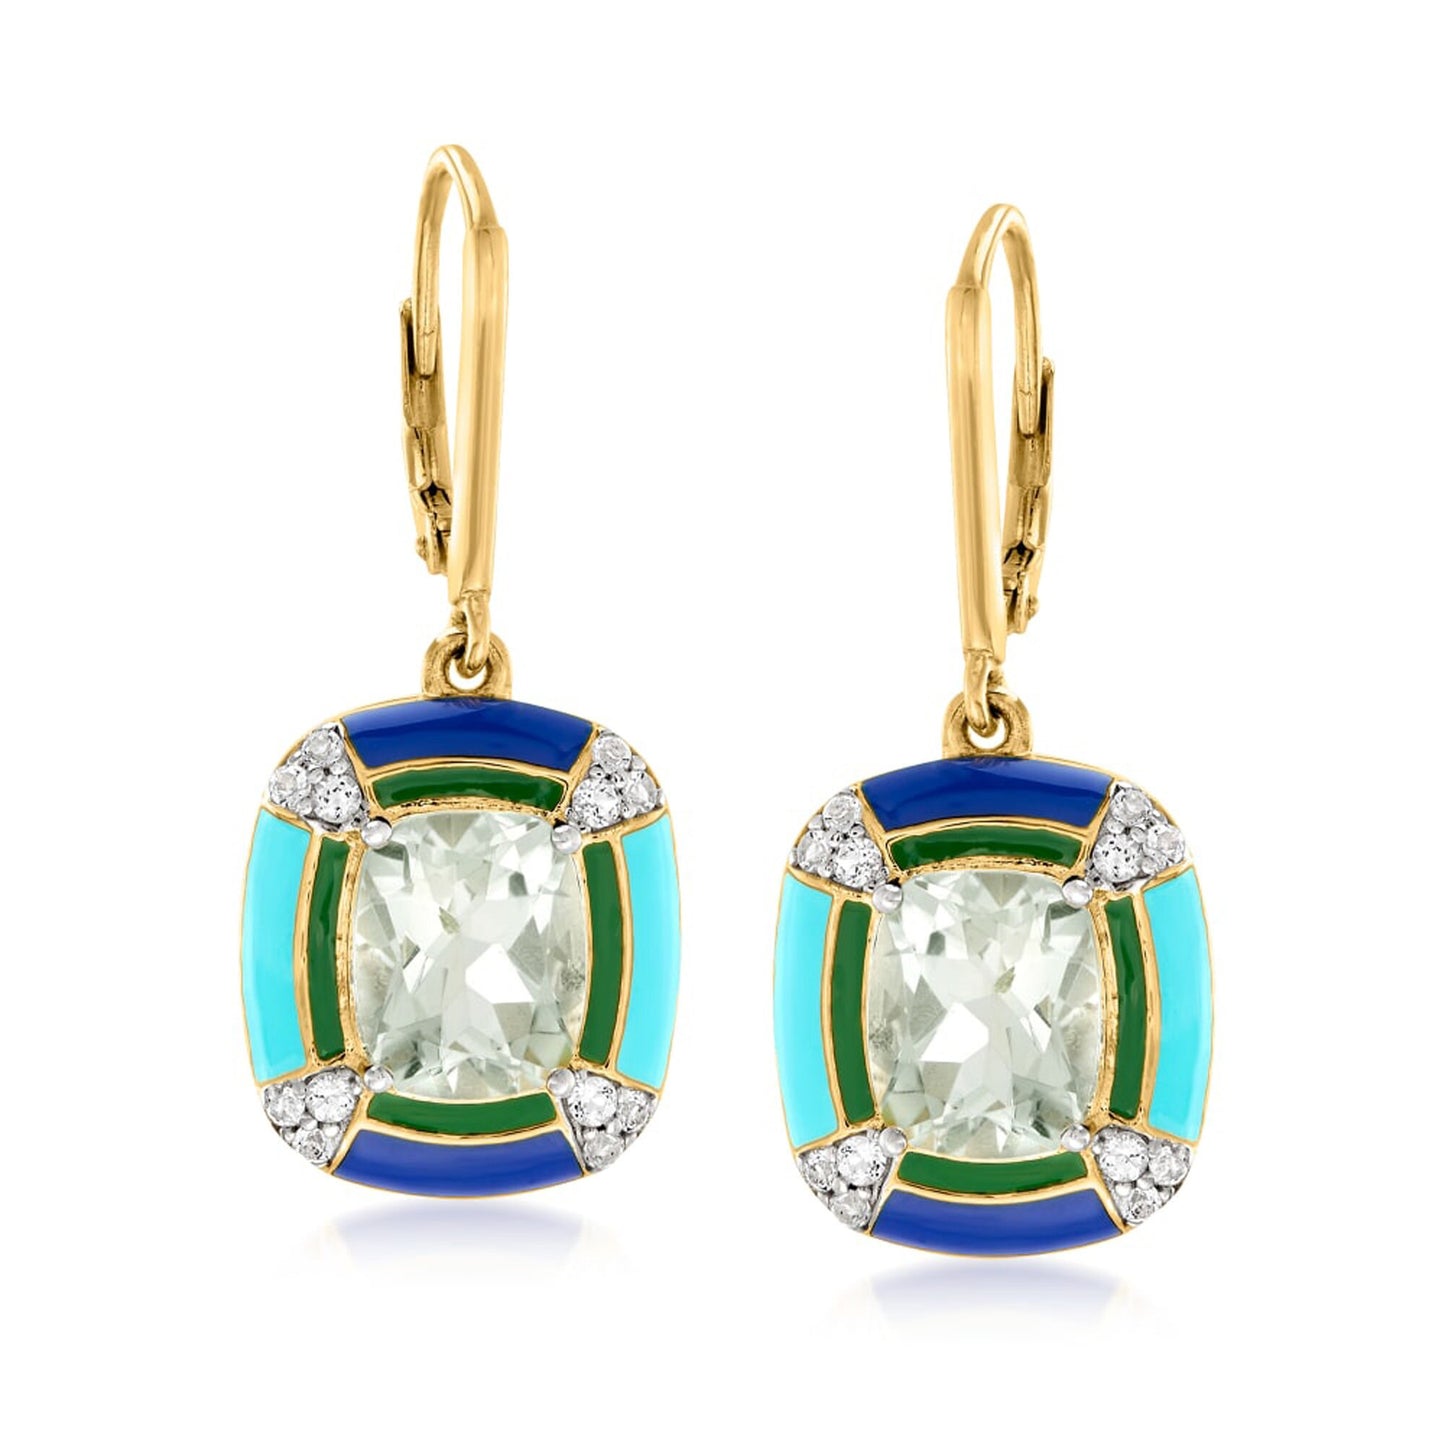 Natural Green Amethyst Gemstone Earring, 925 Sterling Silver Over Gold Plated Dangle Earrings, Enamel Filled Earring, Gift For Her